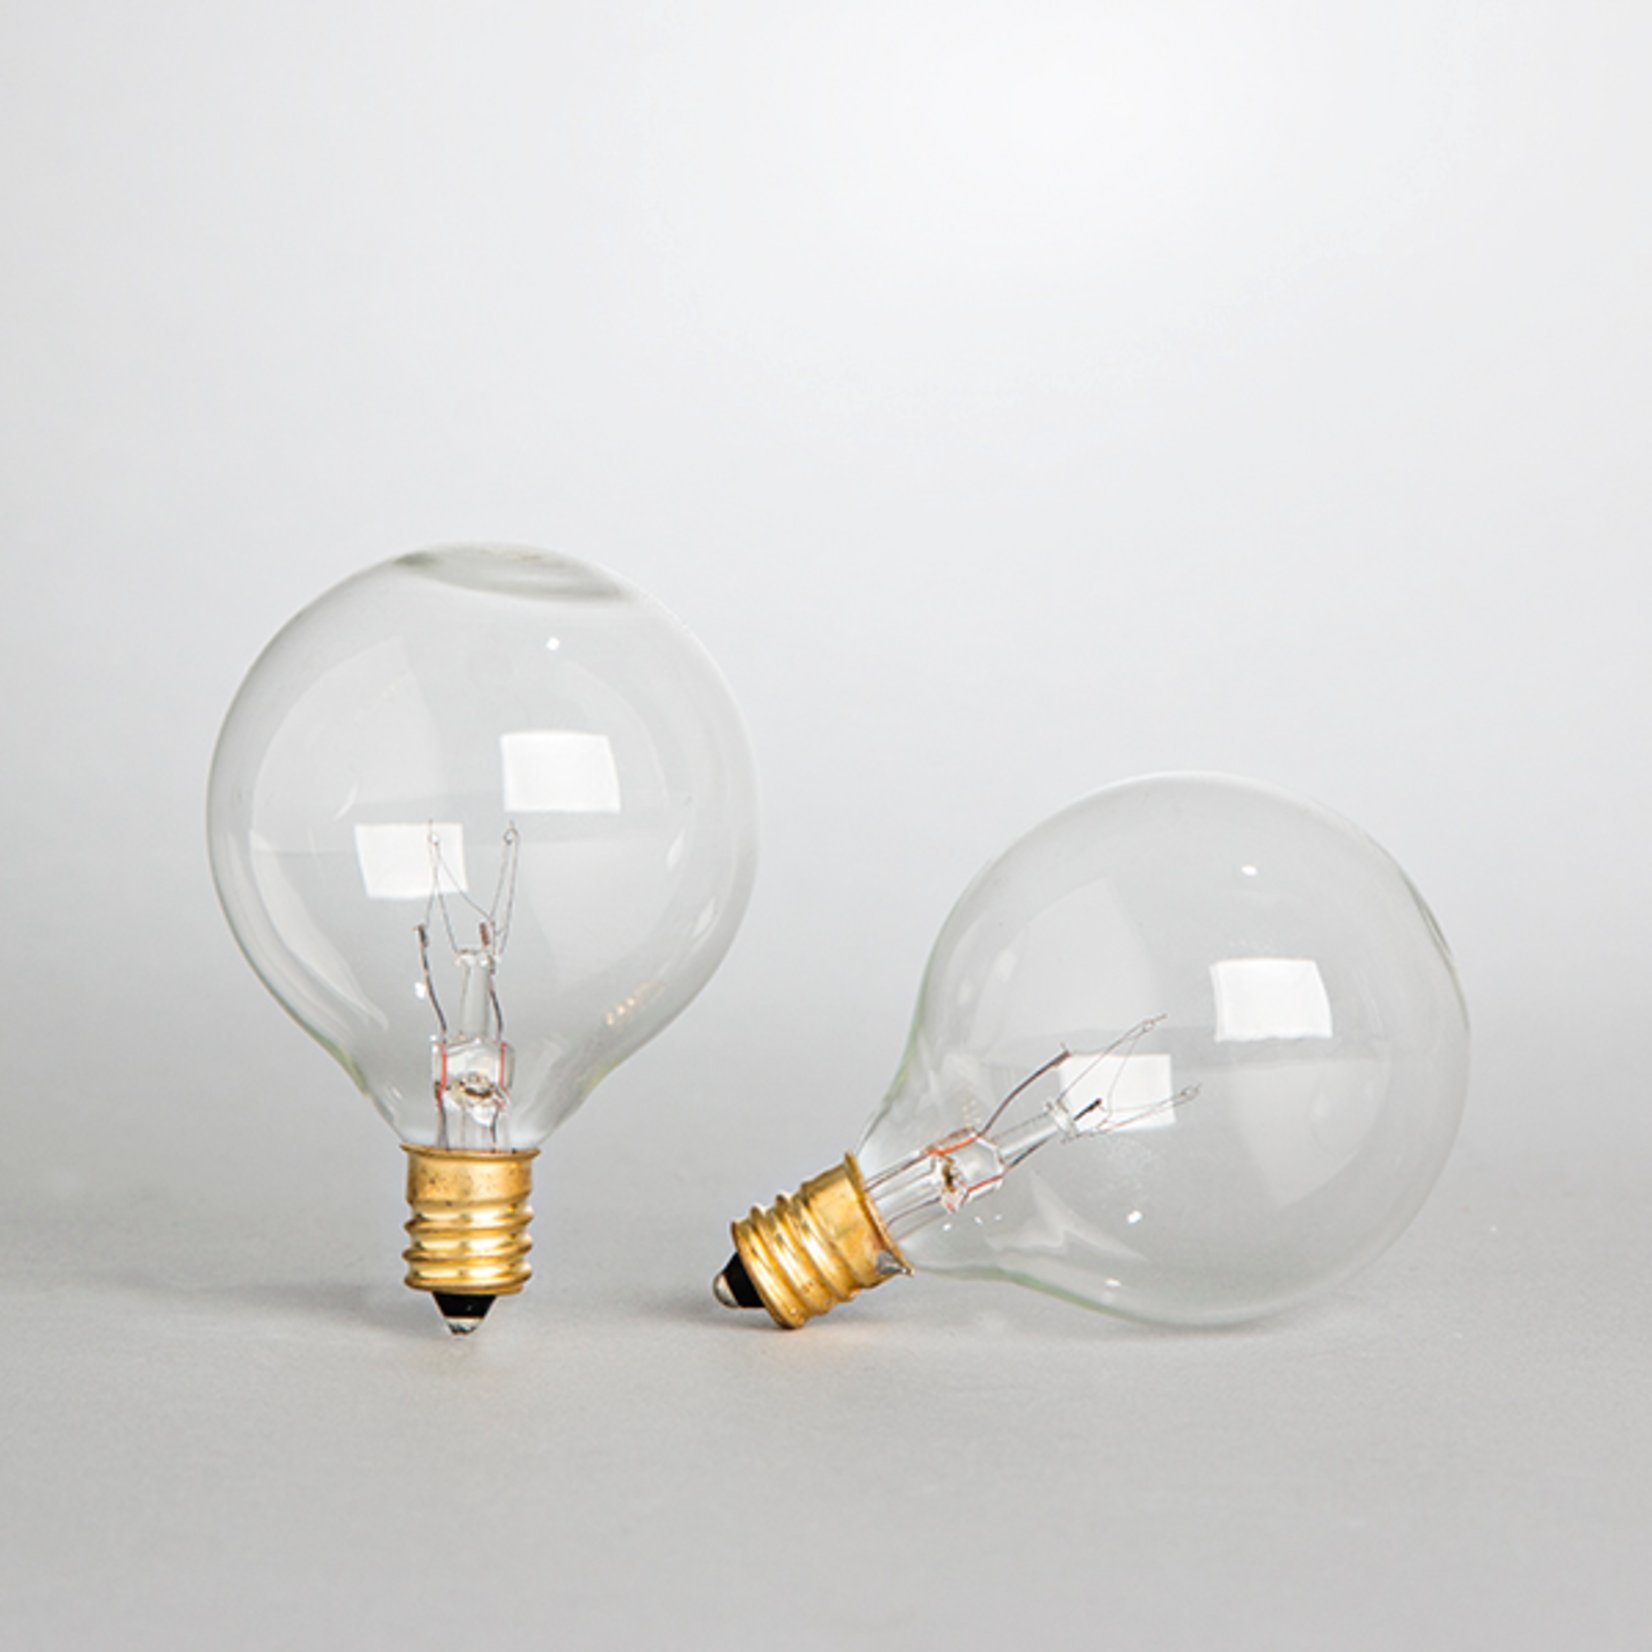 Everlasting Glow Patio Light 5 Watt Replacement Bulbs